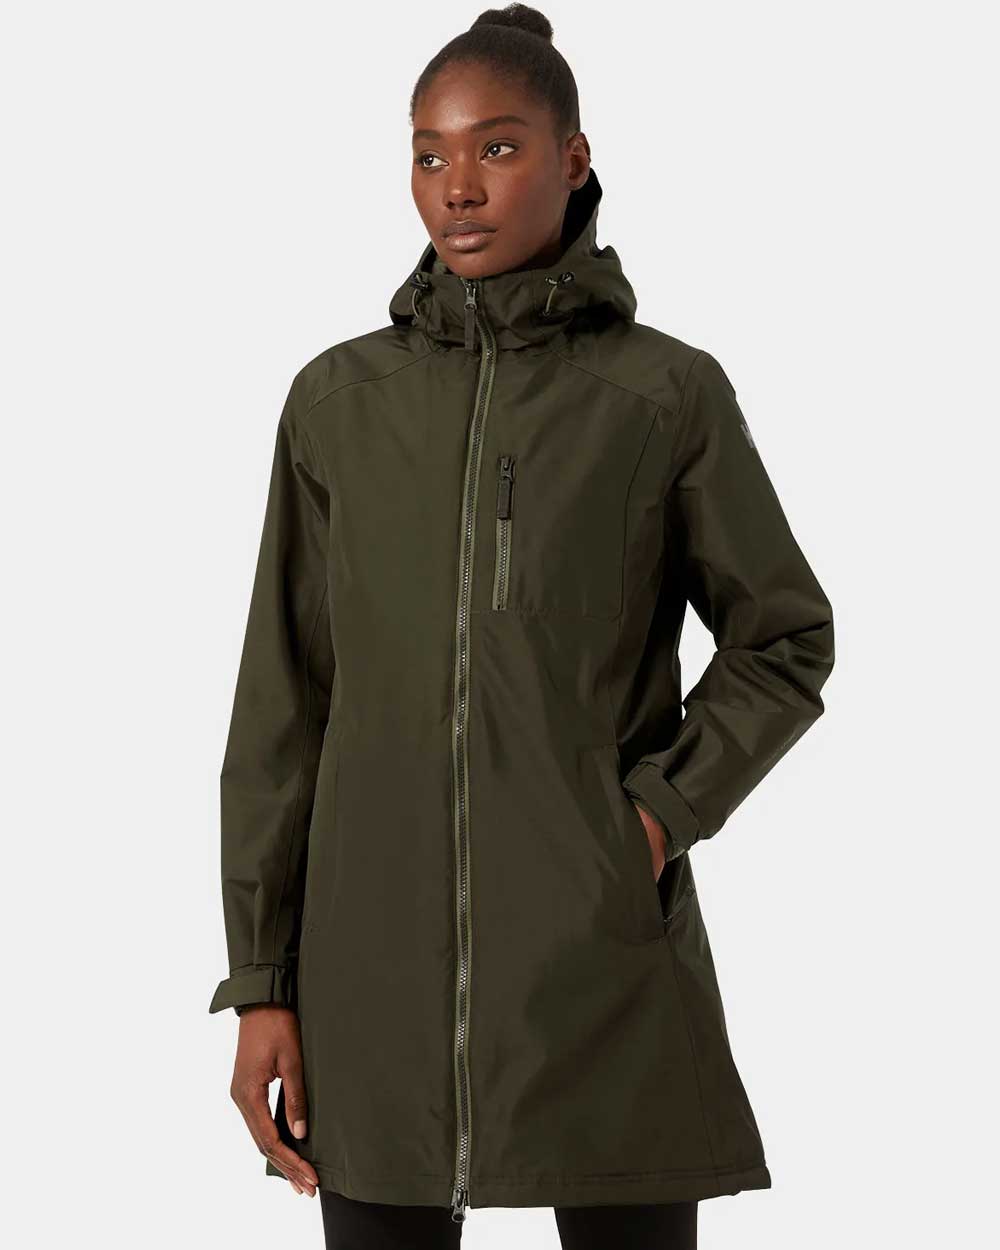 Waterproof Jacket Collection